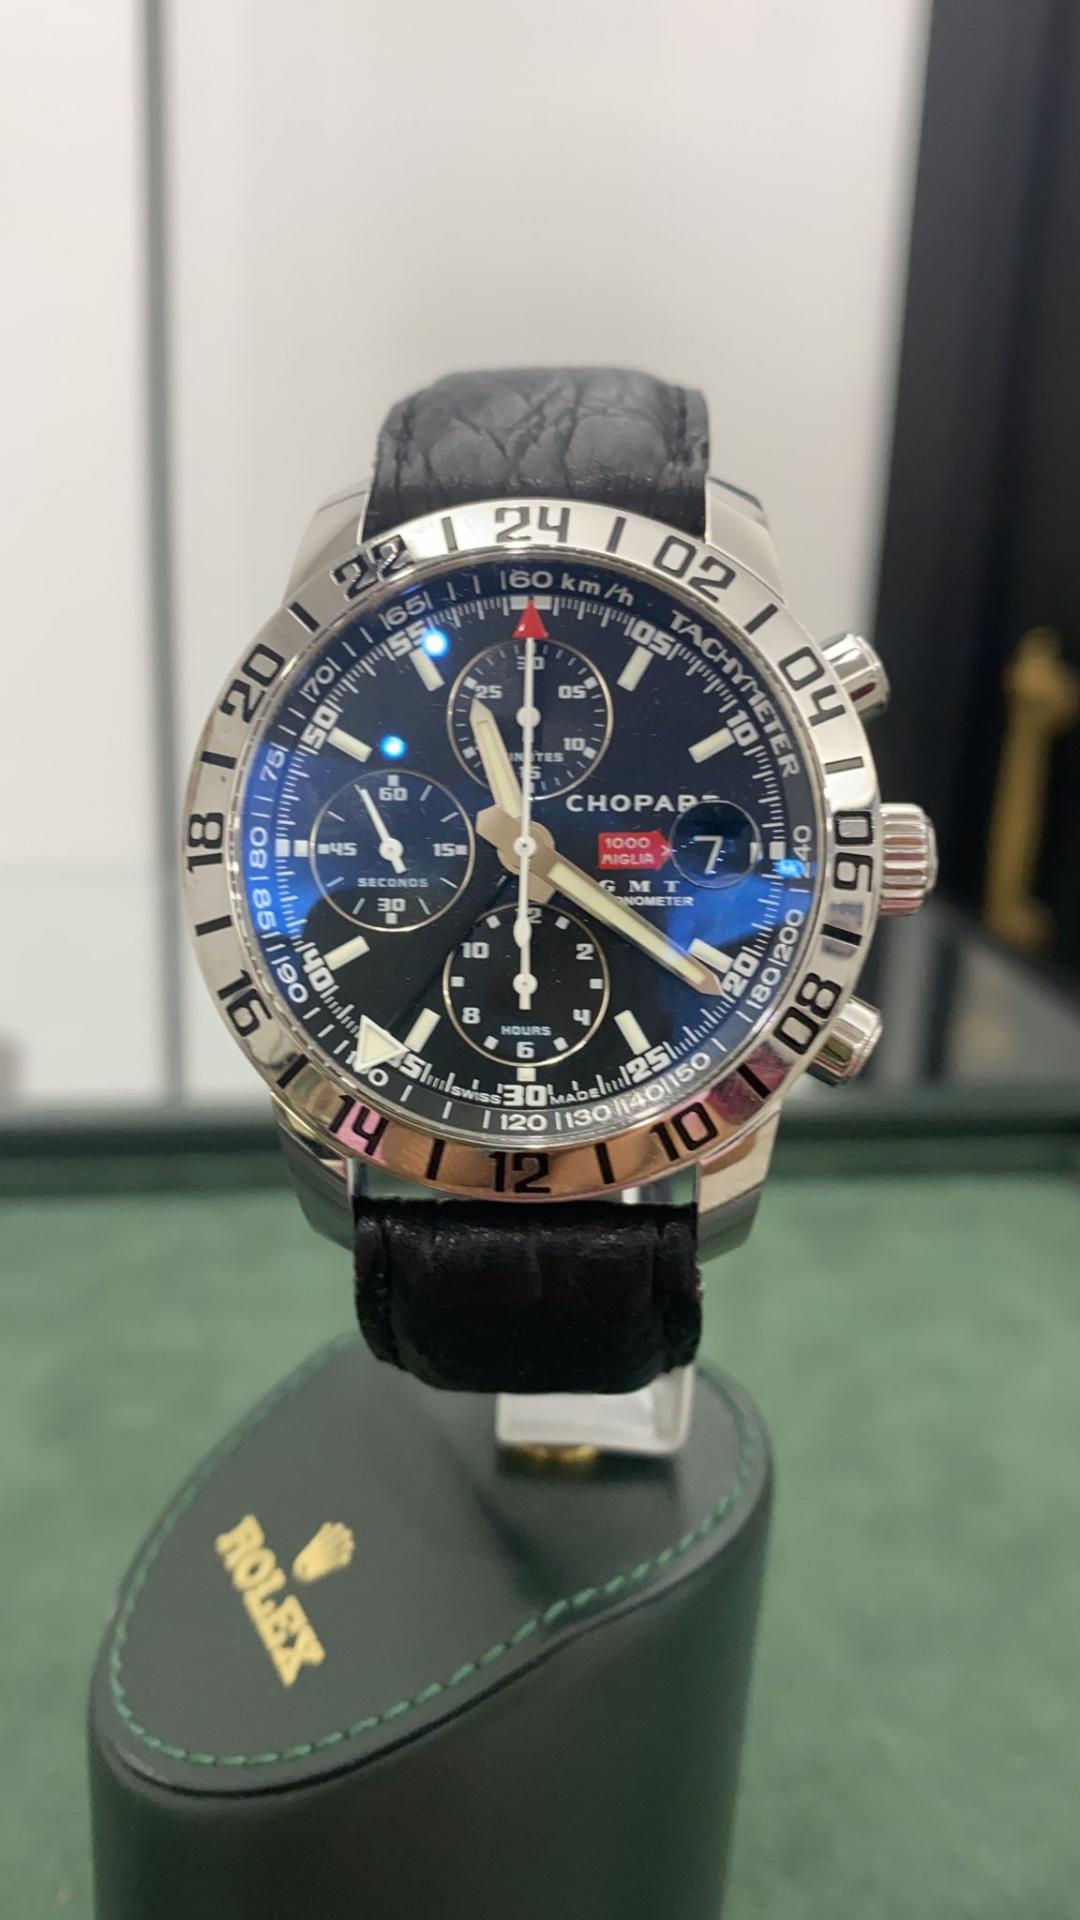 Creo que Fusión azafata Chopard Mille Miglia GMT Reloj cronógrafo automático de acero inoxidable  para hombre Ref.8992: 2.200,00 €